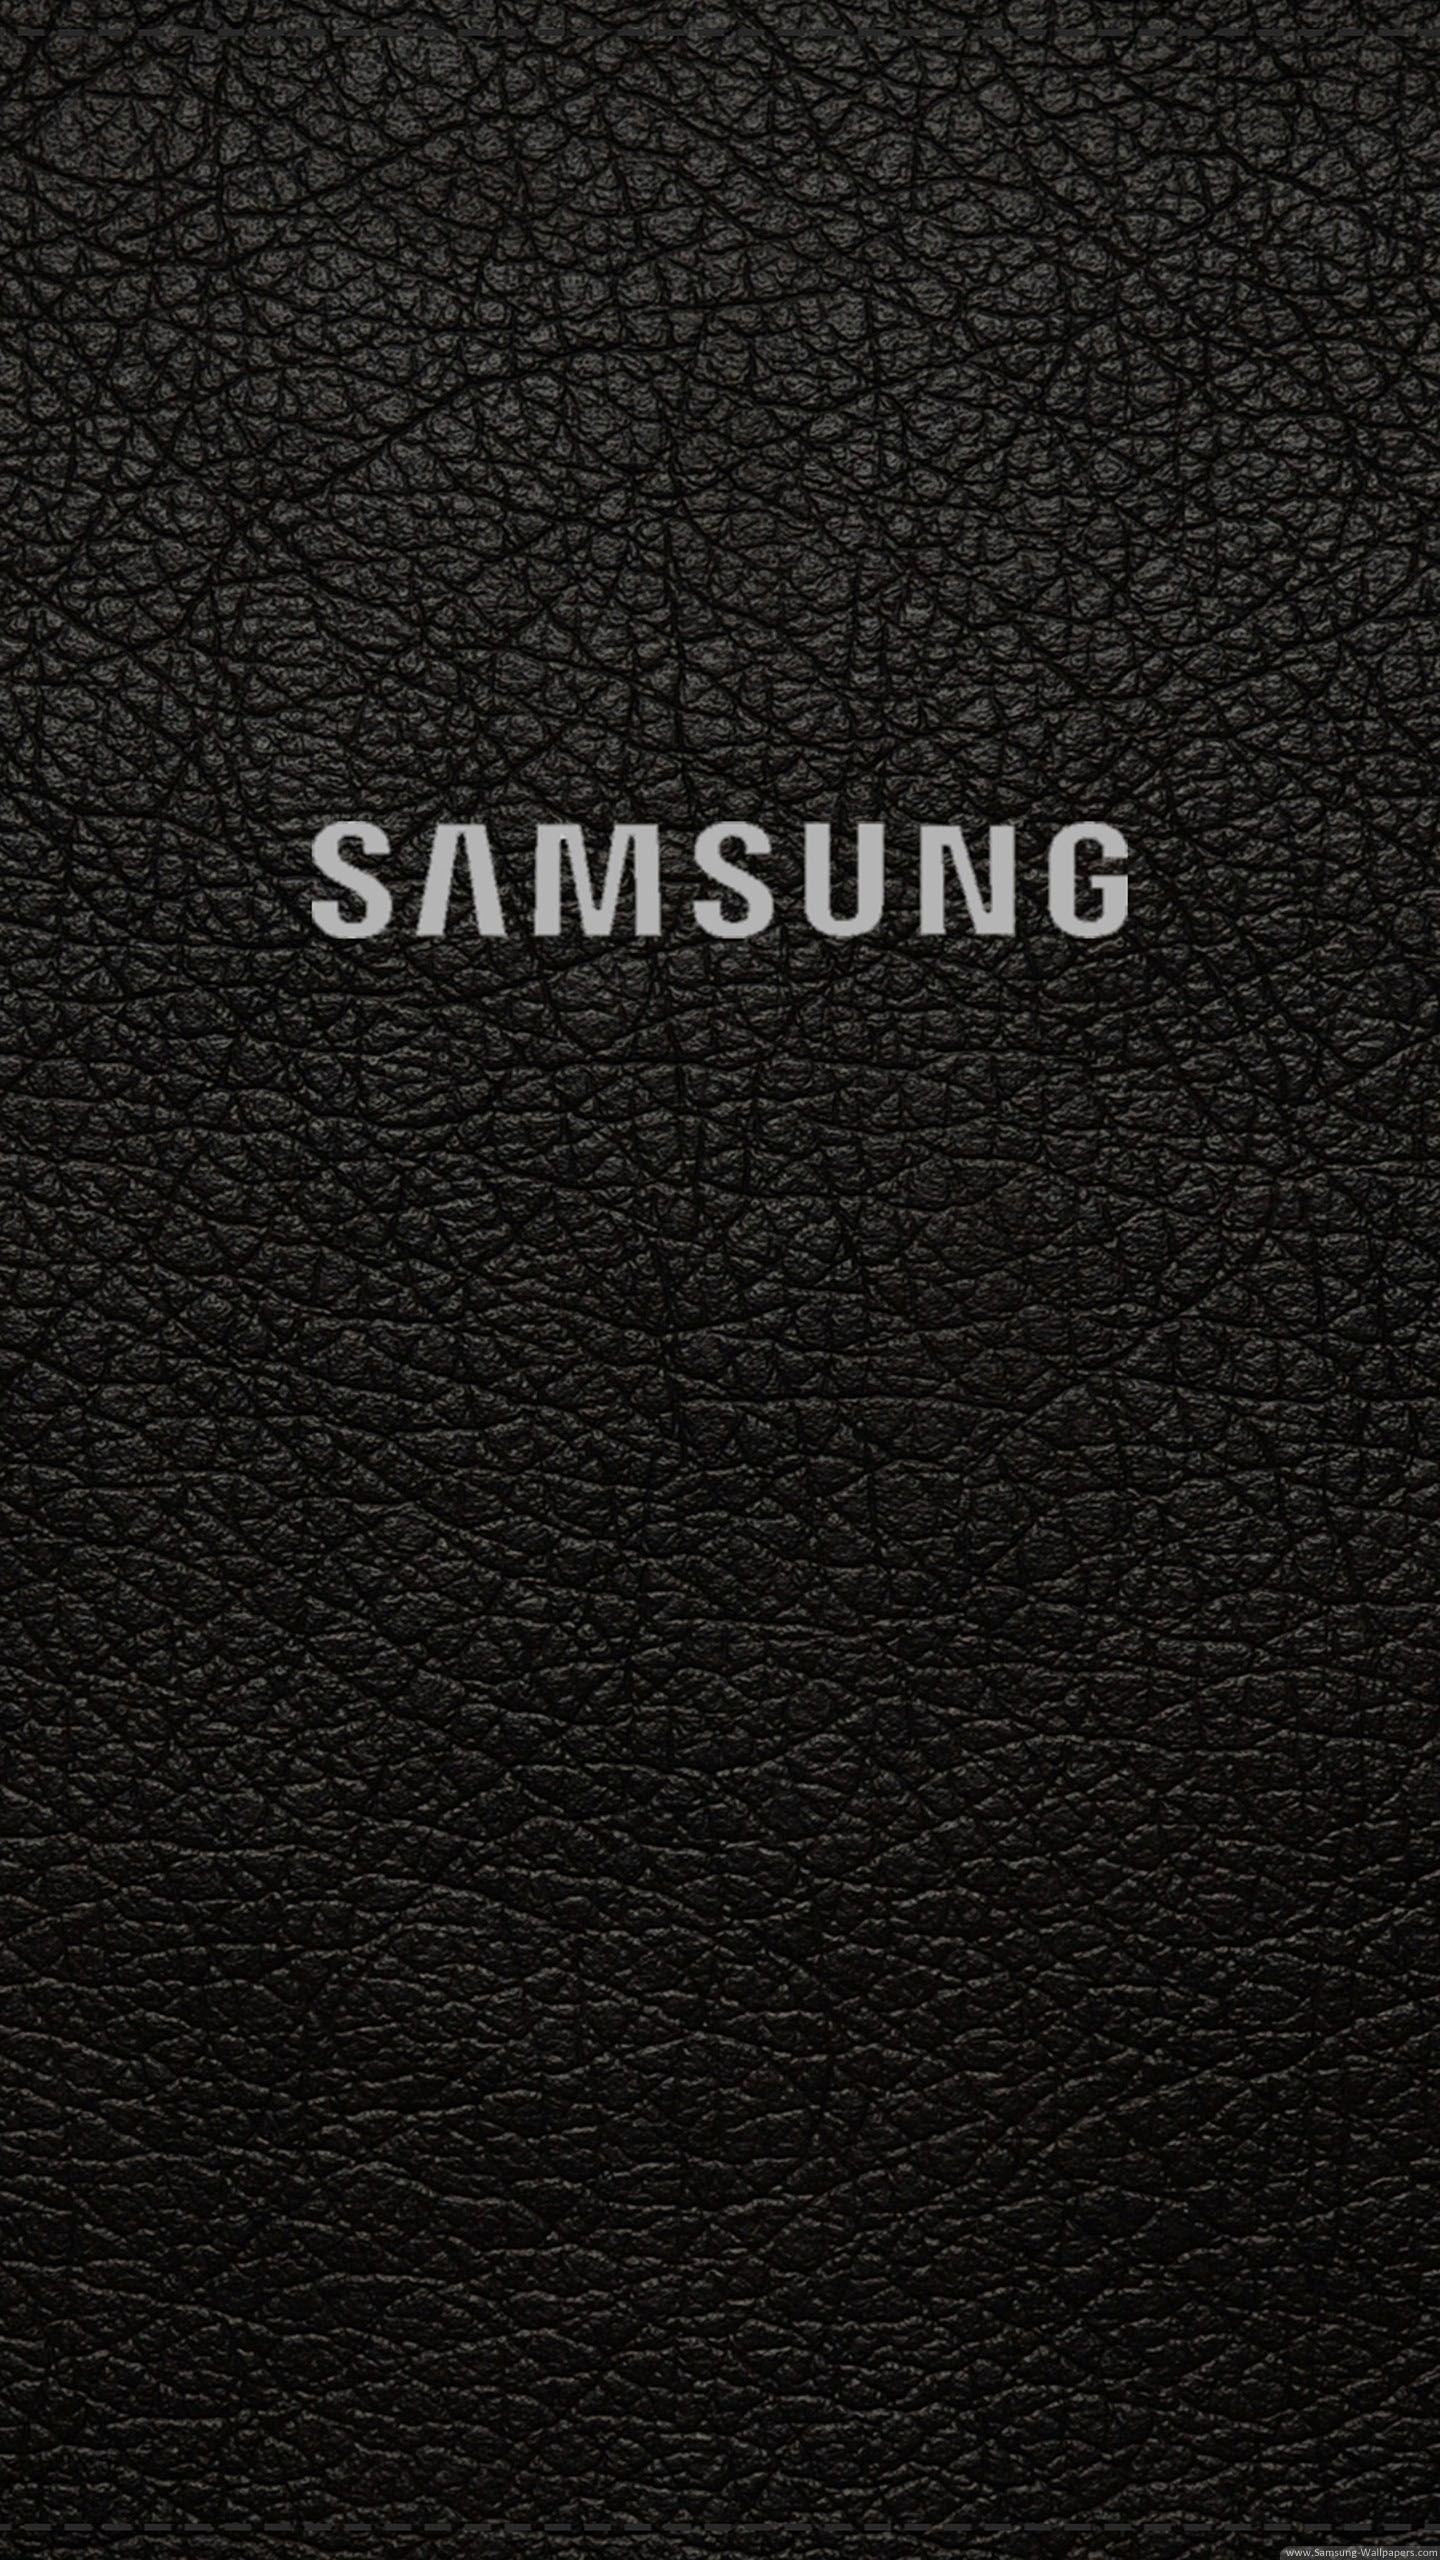 Samsung Black Wallpaper Top Background